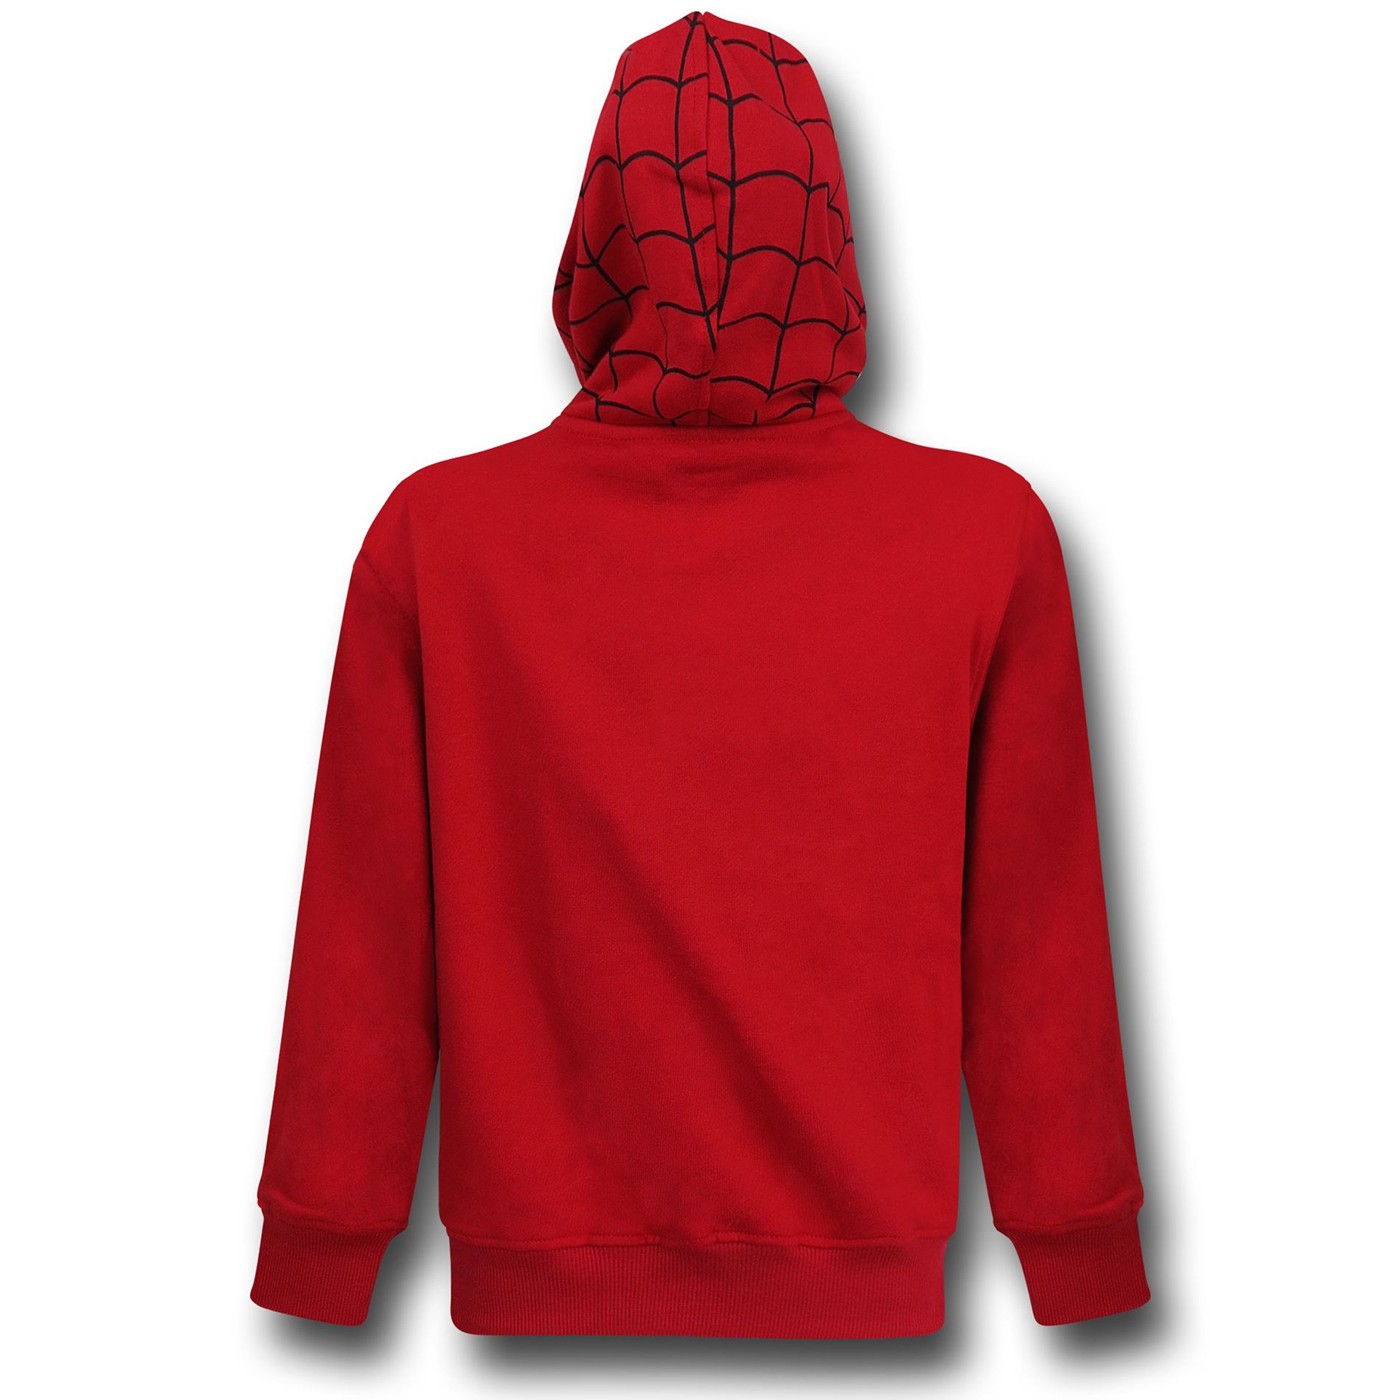 Spectacular Spiderman Masked Kids Costume Hoodie